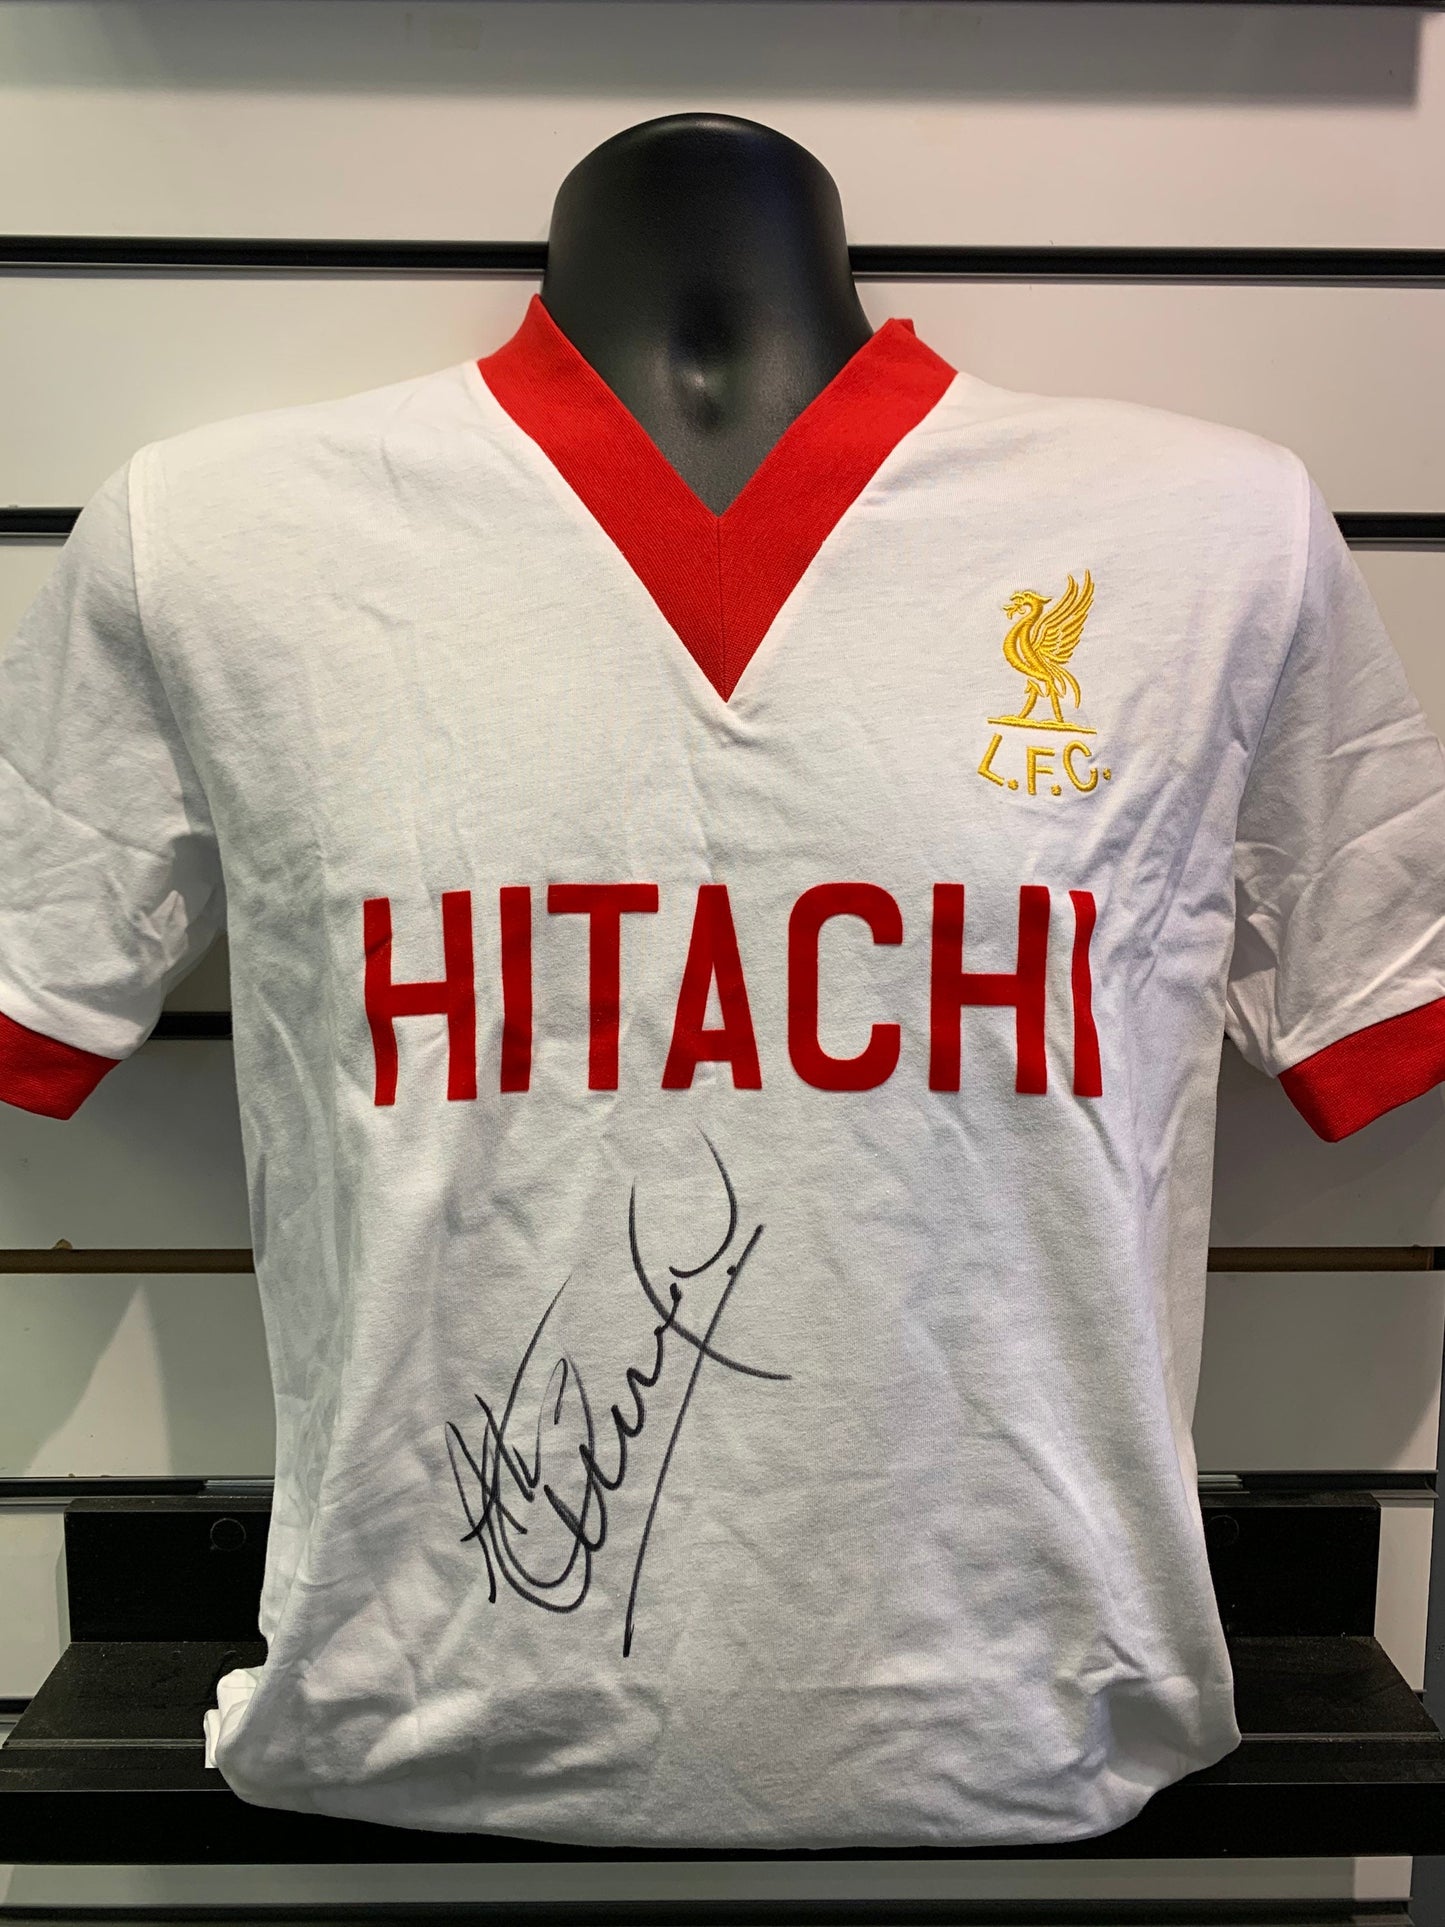 Alan Kennedy - Liverpool signed replica shirt - LFC, Liverpool memorabilia, gift, (UNFRAMED)